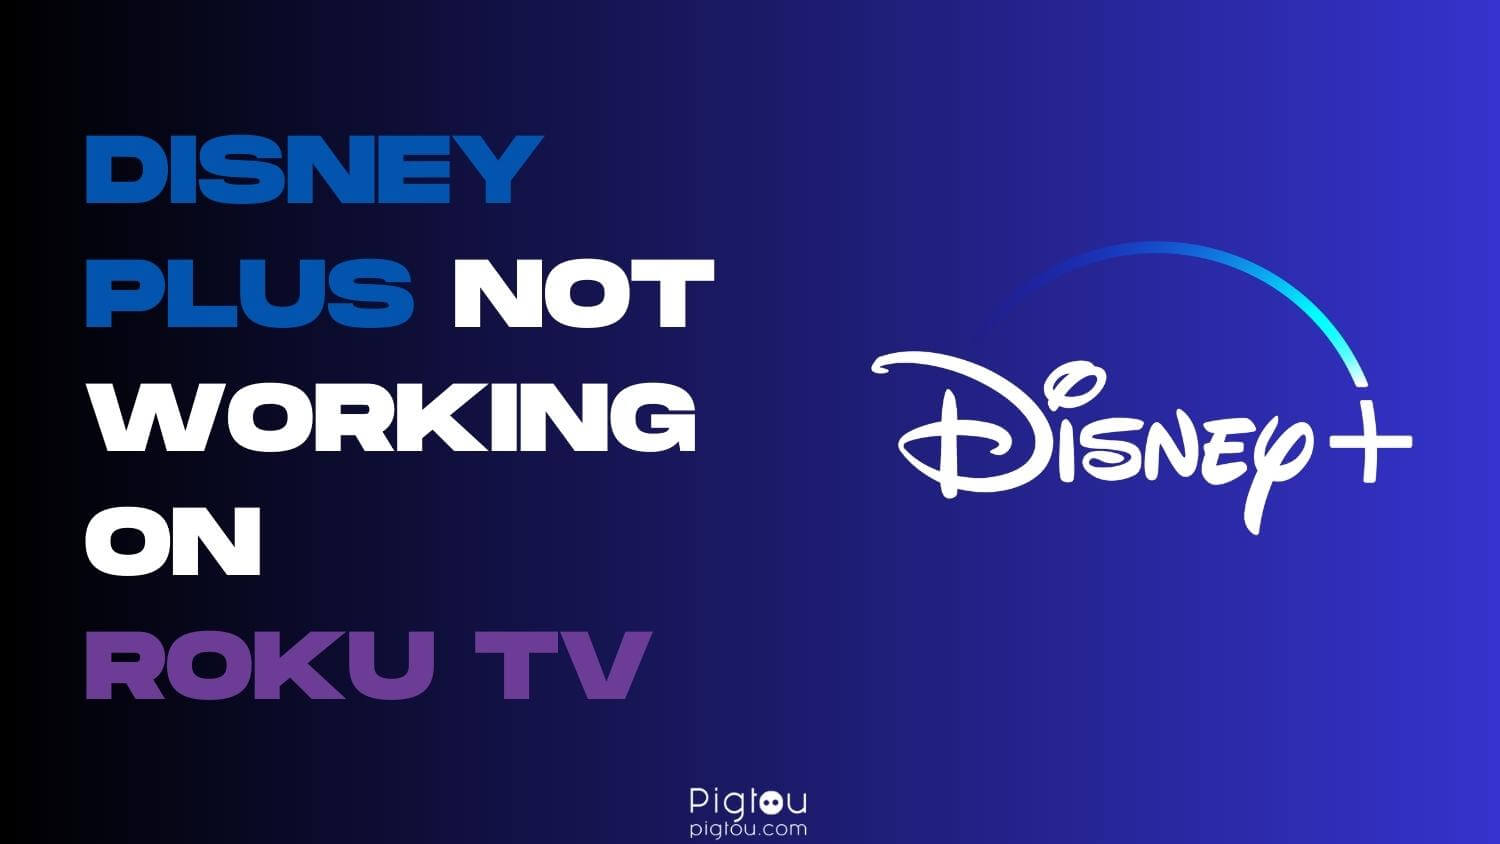 Disney Plus App is Not Working on Roku TV